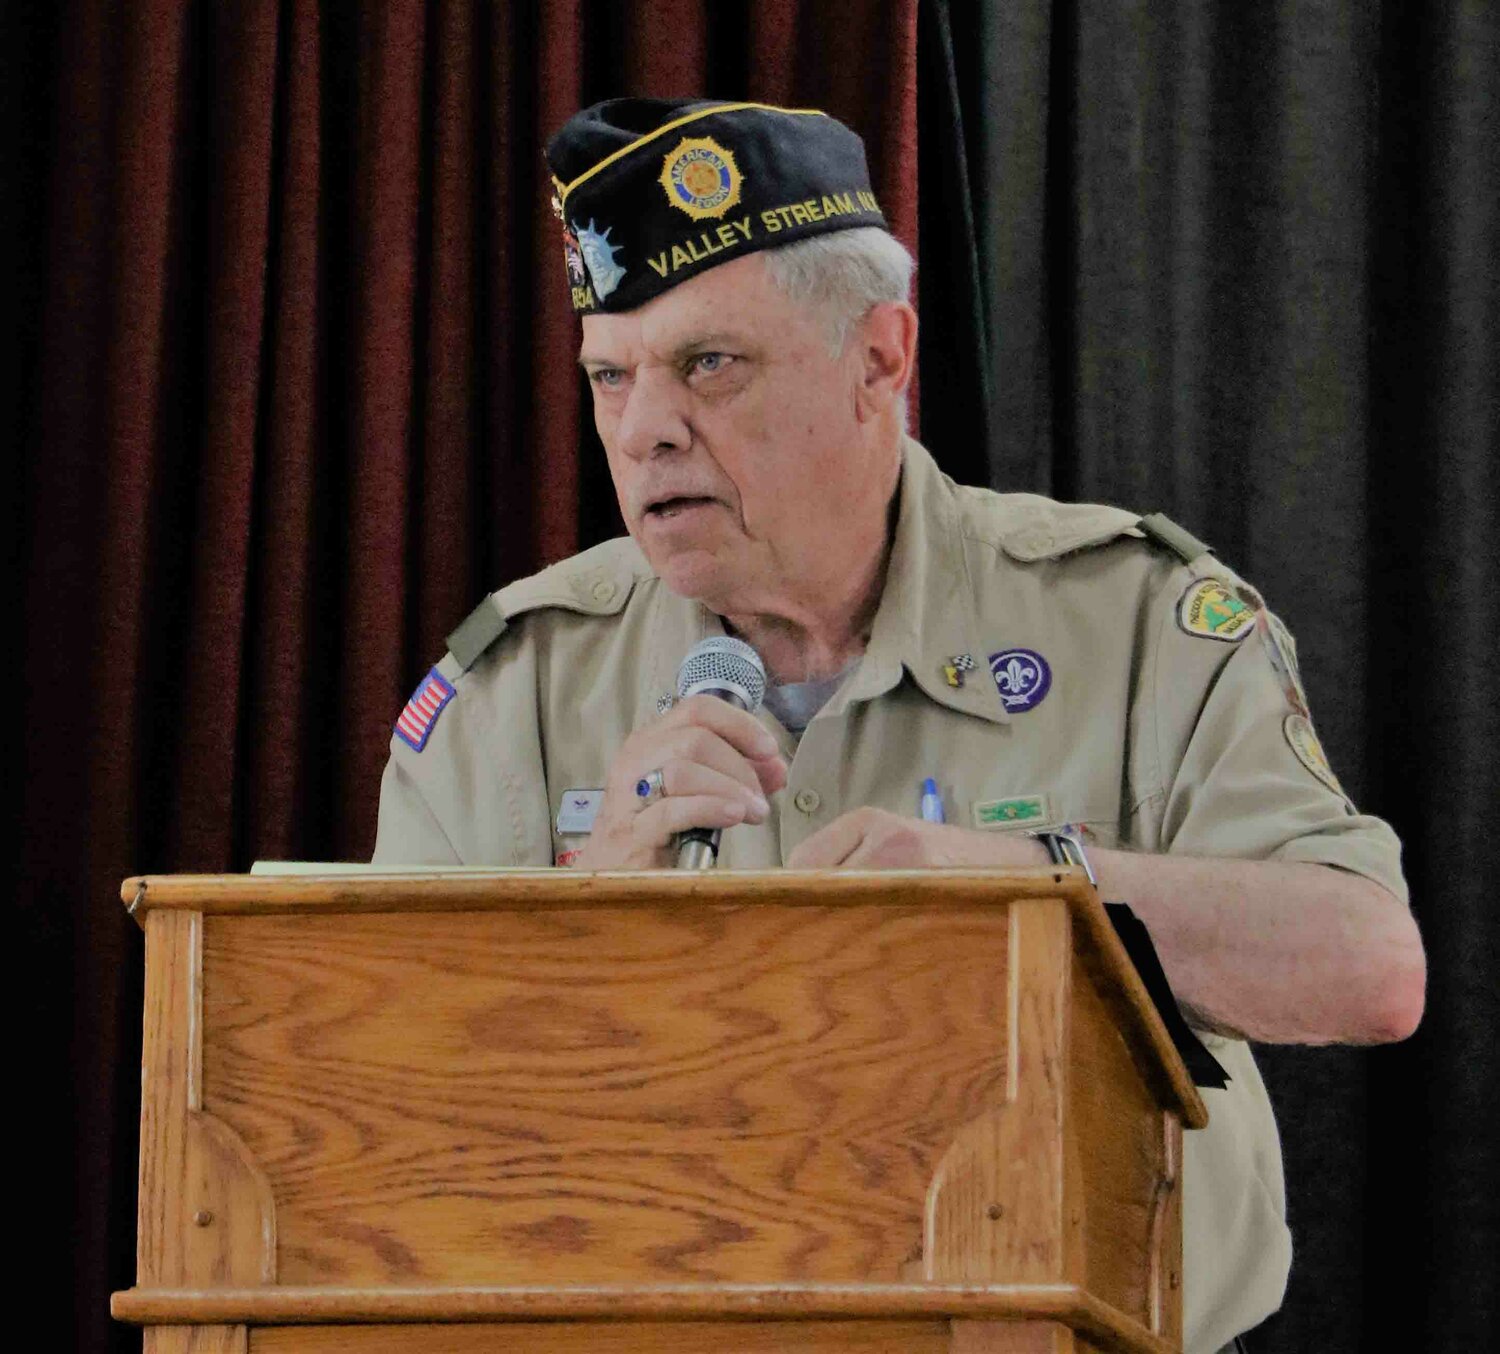 George Schuchman, Charter Organization Representative, presented citations to the Eagle Scouts.